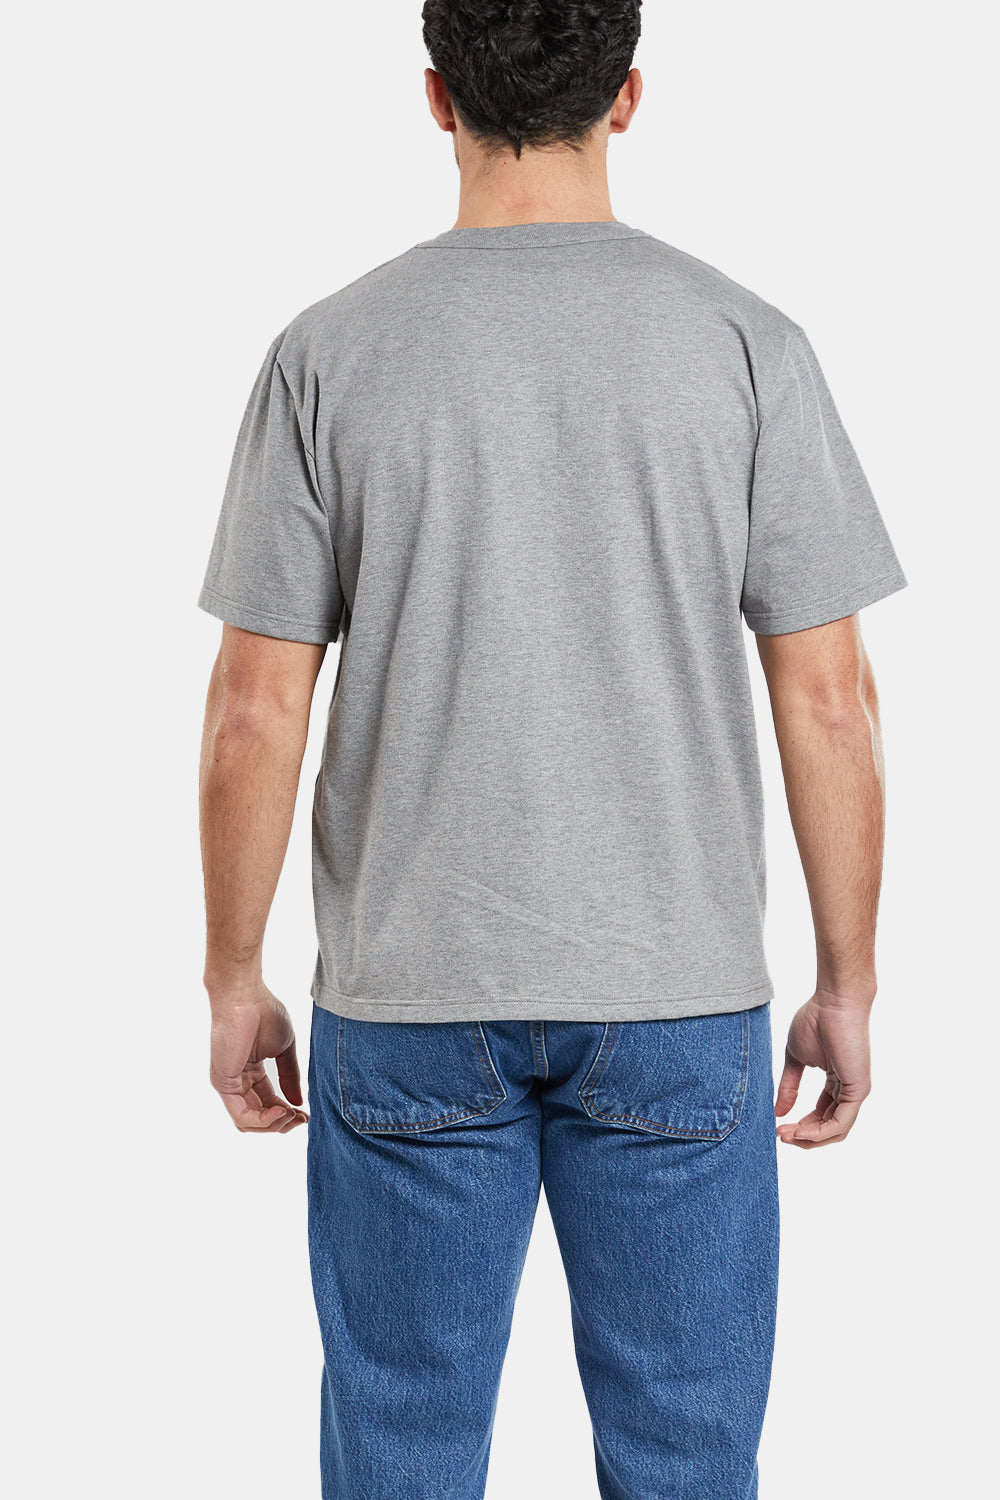 Armor Lux Heritage Organic Callac T-Shirt (Misty Grey)